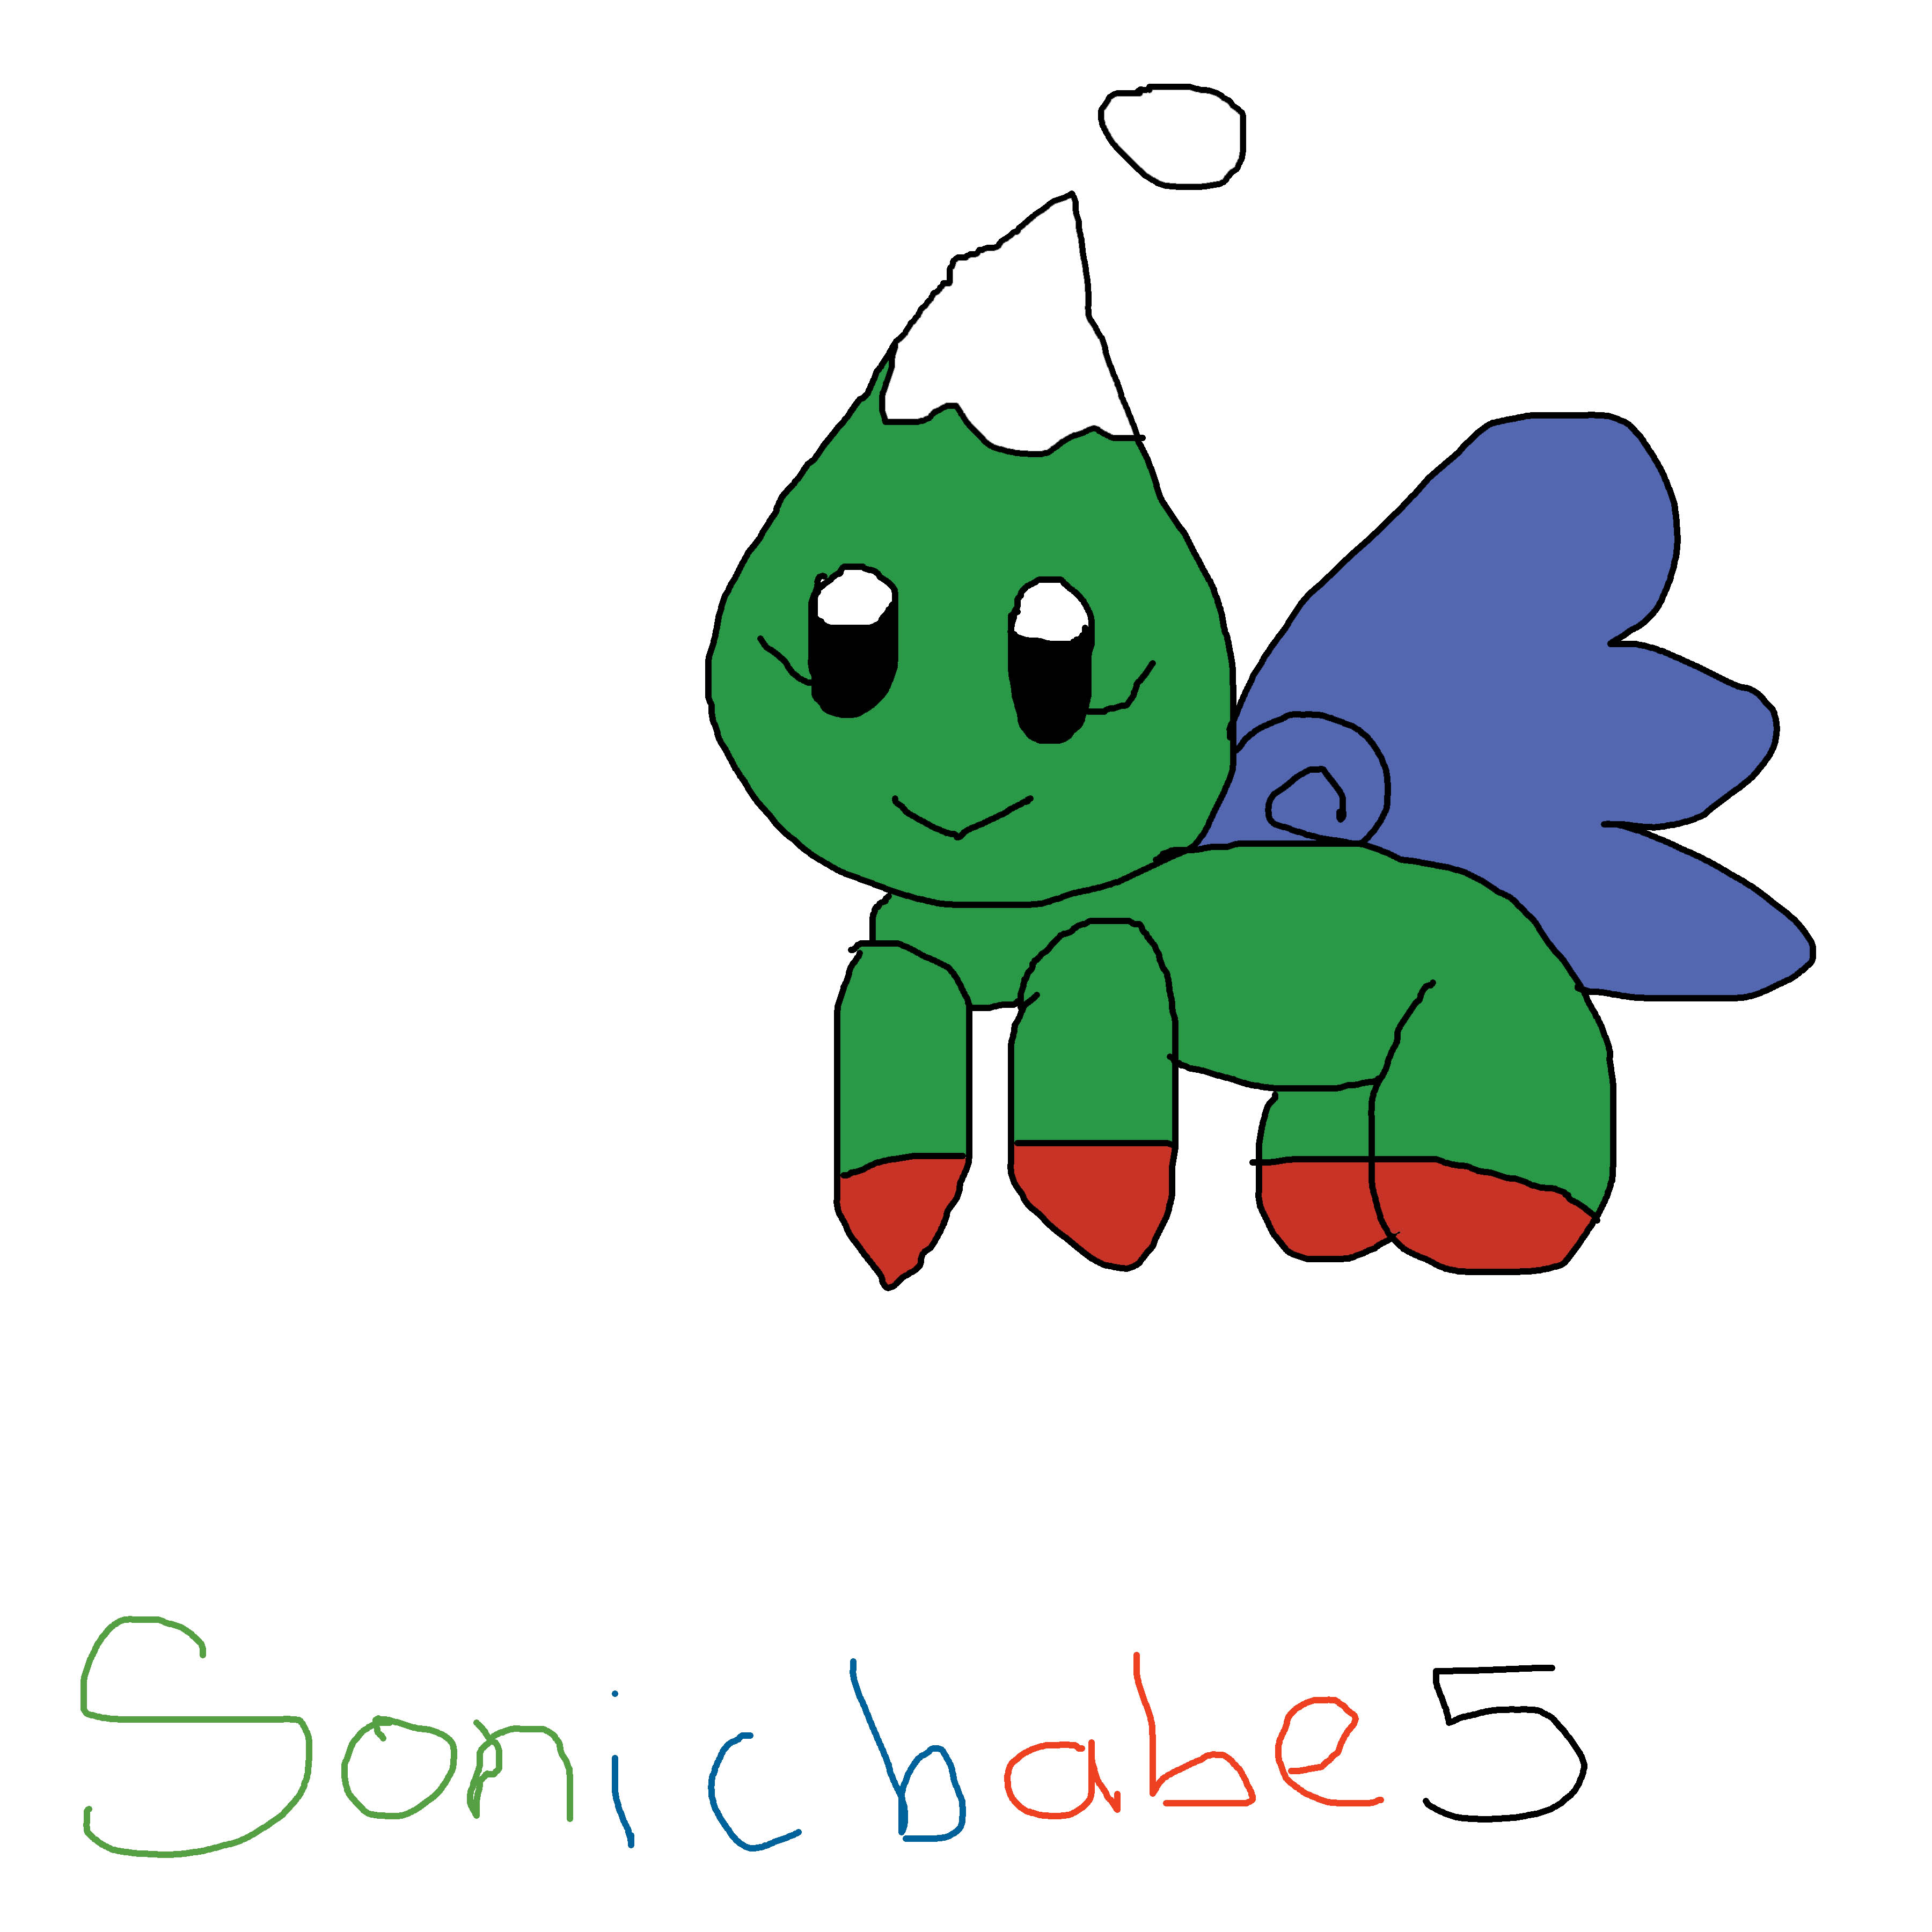 sonicbabe5 by sam01